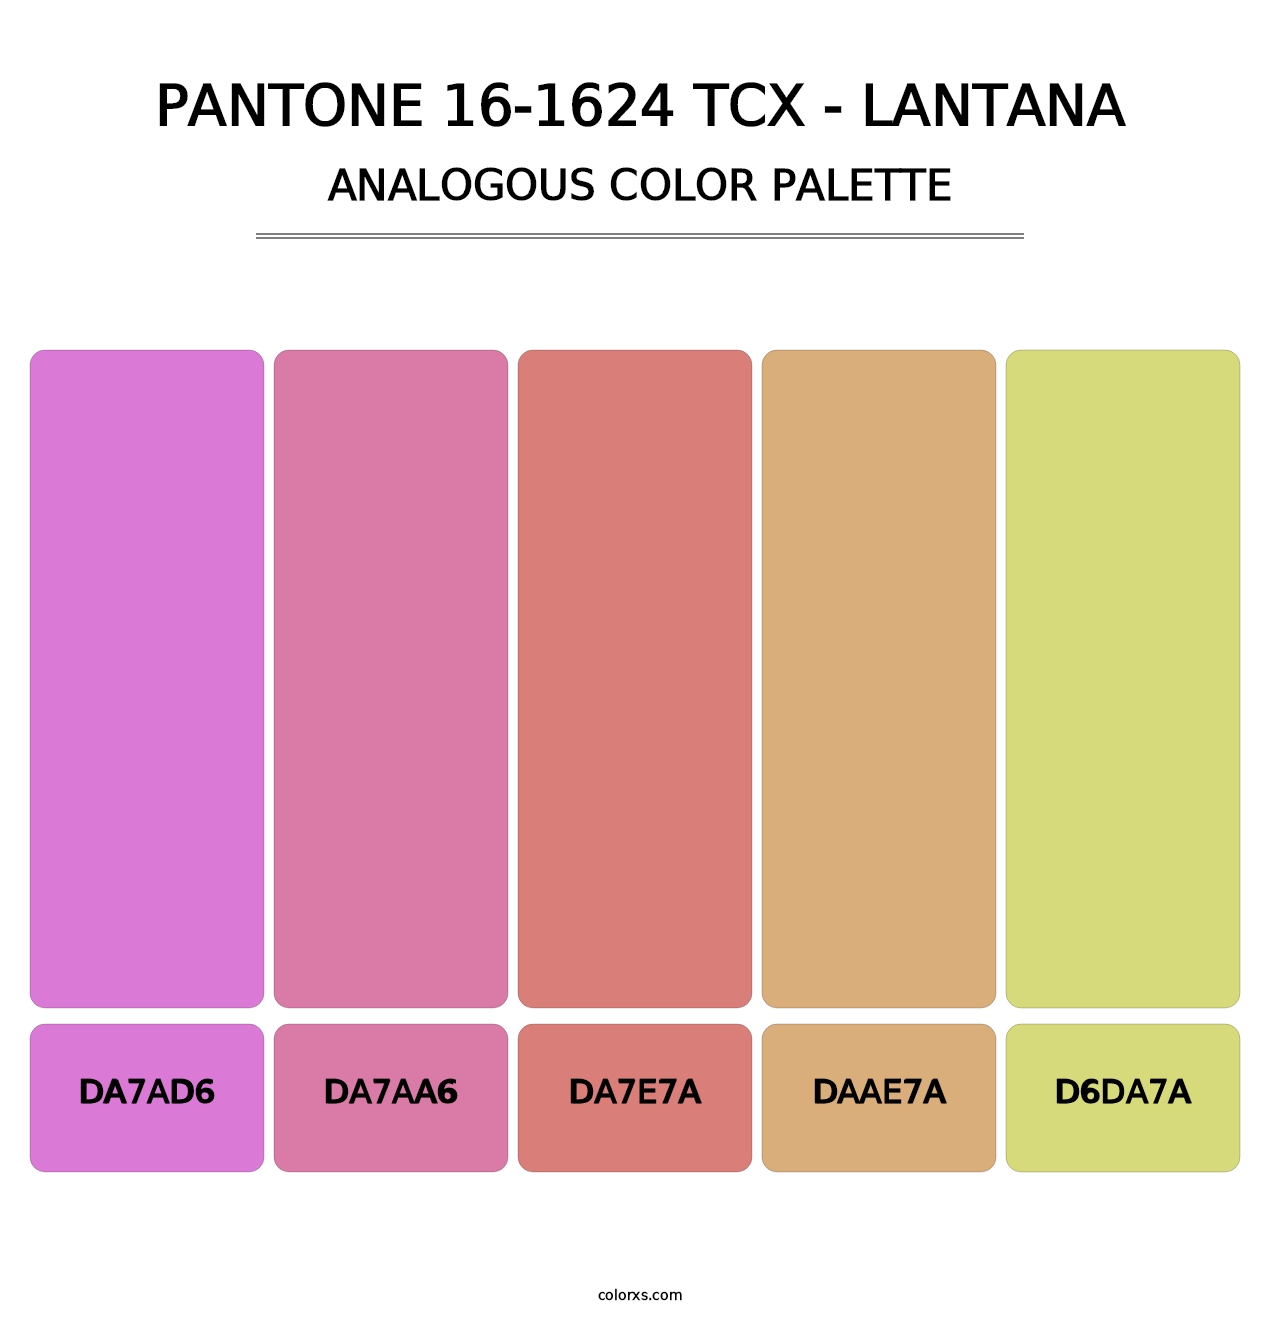 PANTONE 16-1624 TCX - Lantana - Analogous Color Palette